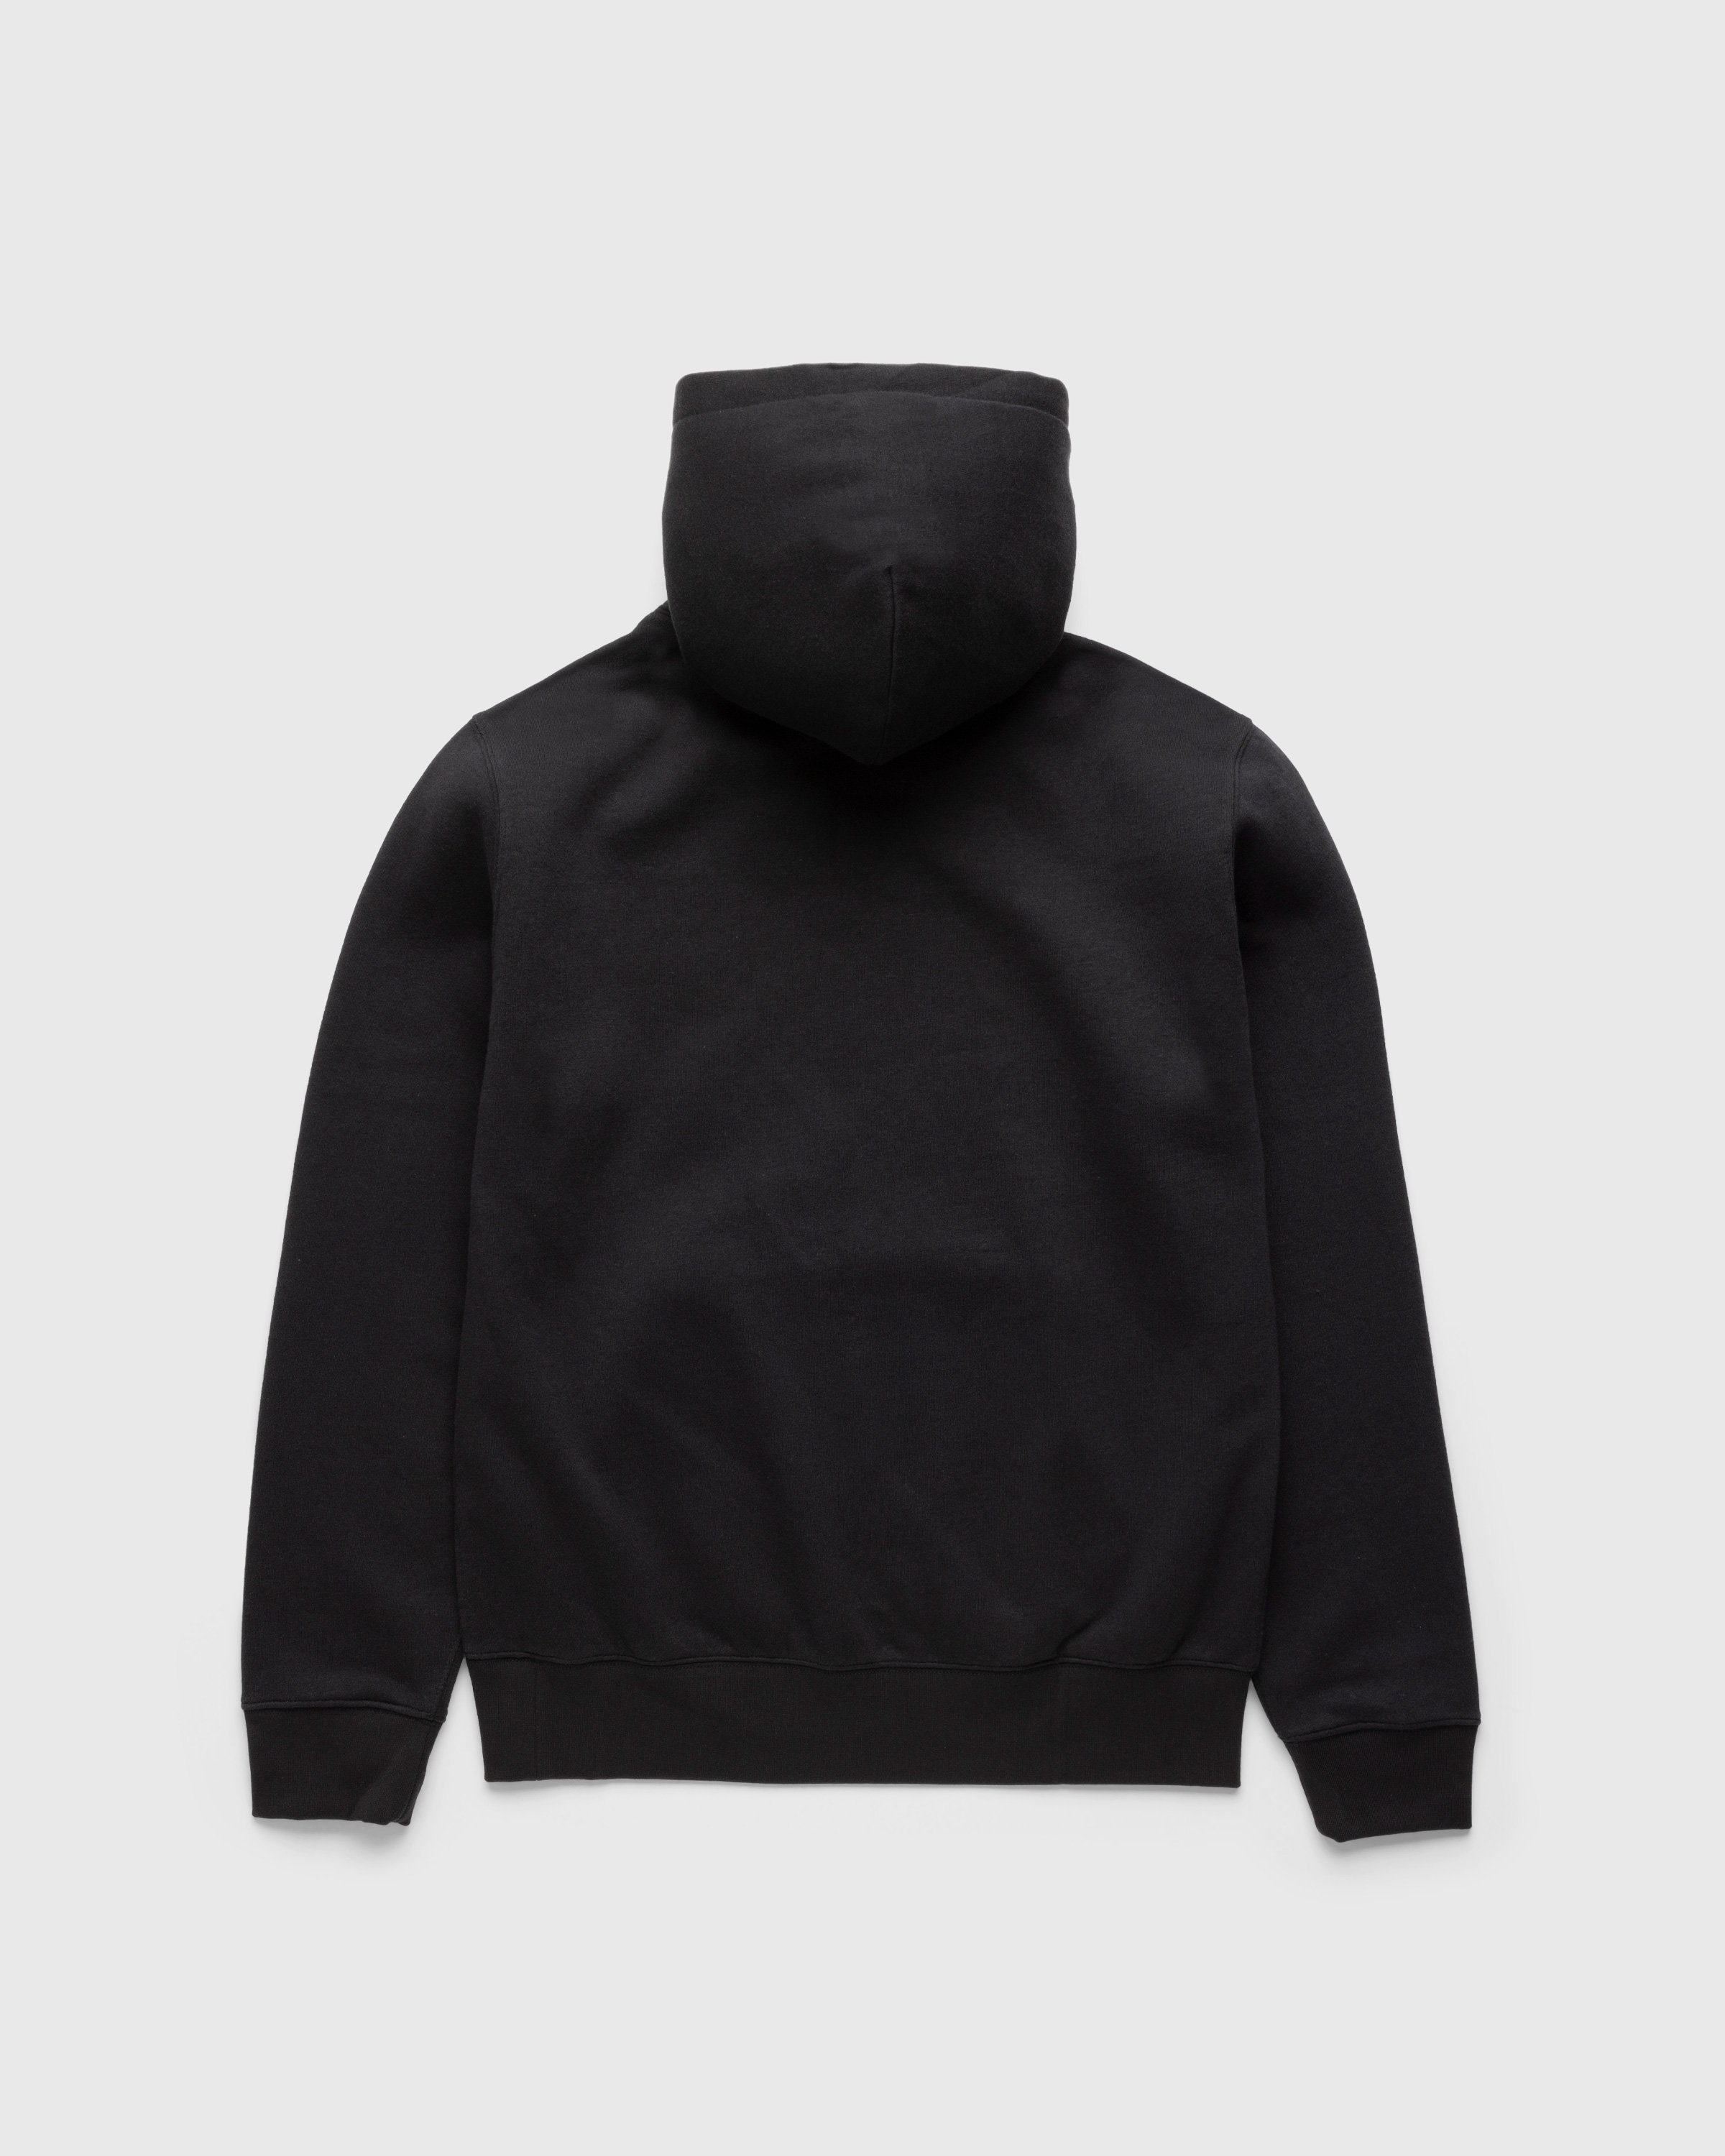 Ralph Lauren x Fortnite - Long Sleeve Sweatshirt Black - Clothing - Black - Image 2